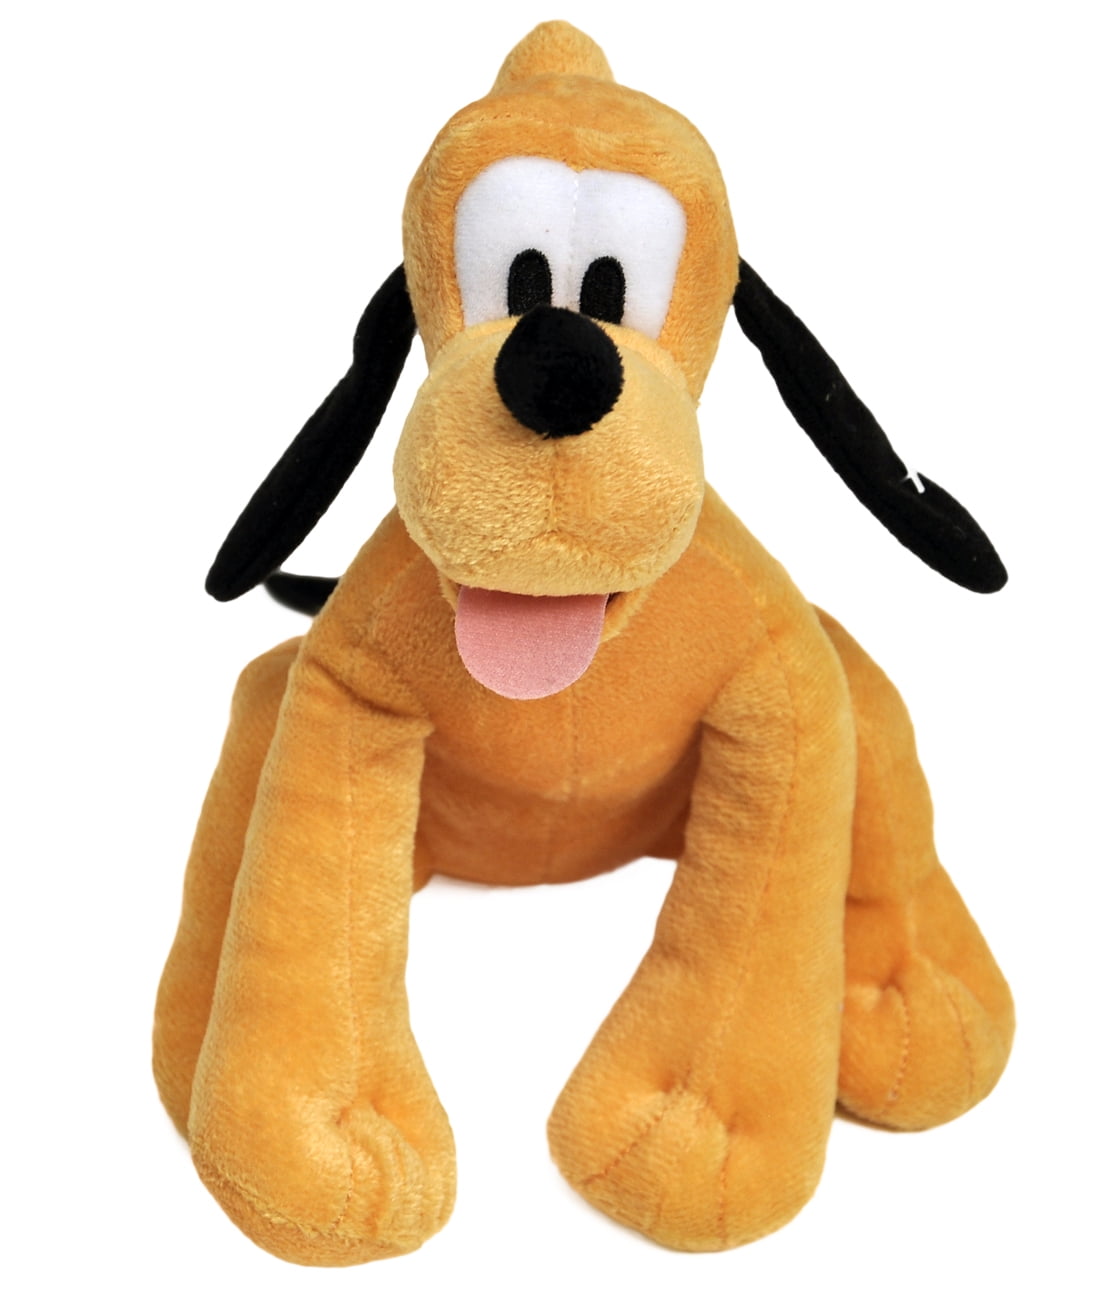 Pluto Goofy Birthday Cupcake Disney Micro Plush Stuffed Animal NWT More in Store 